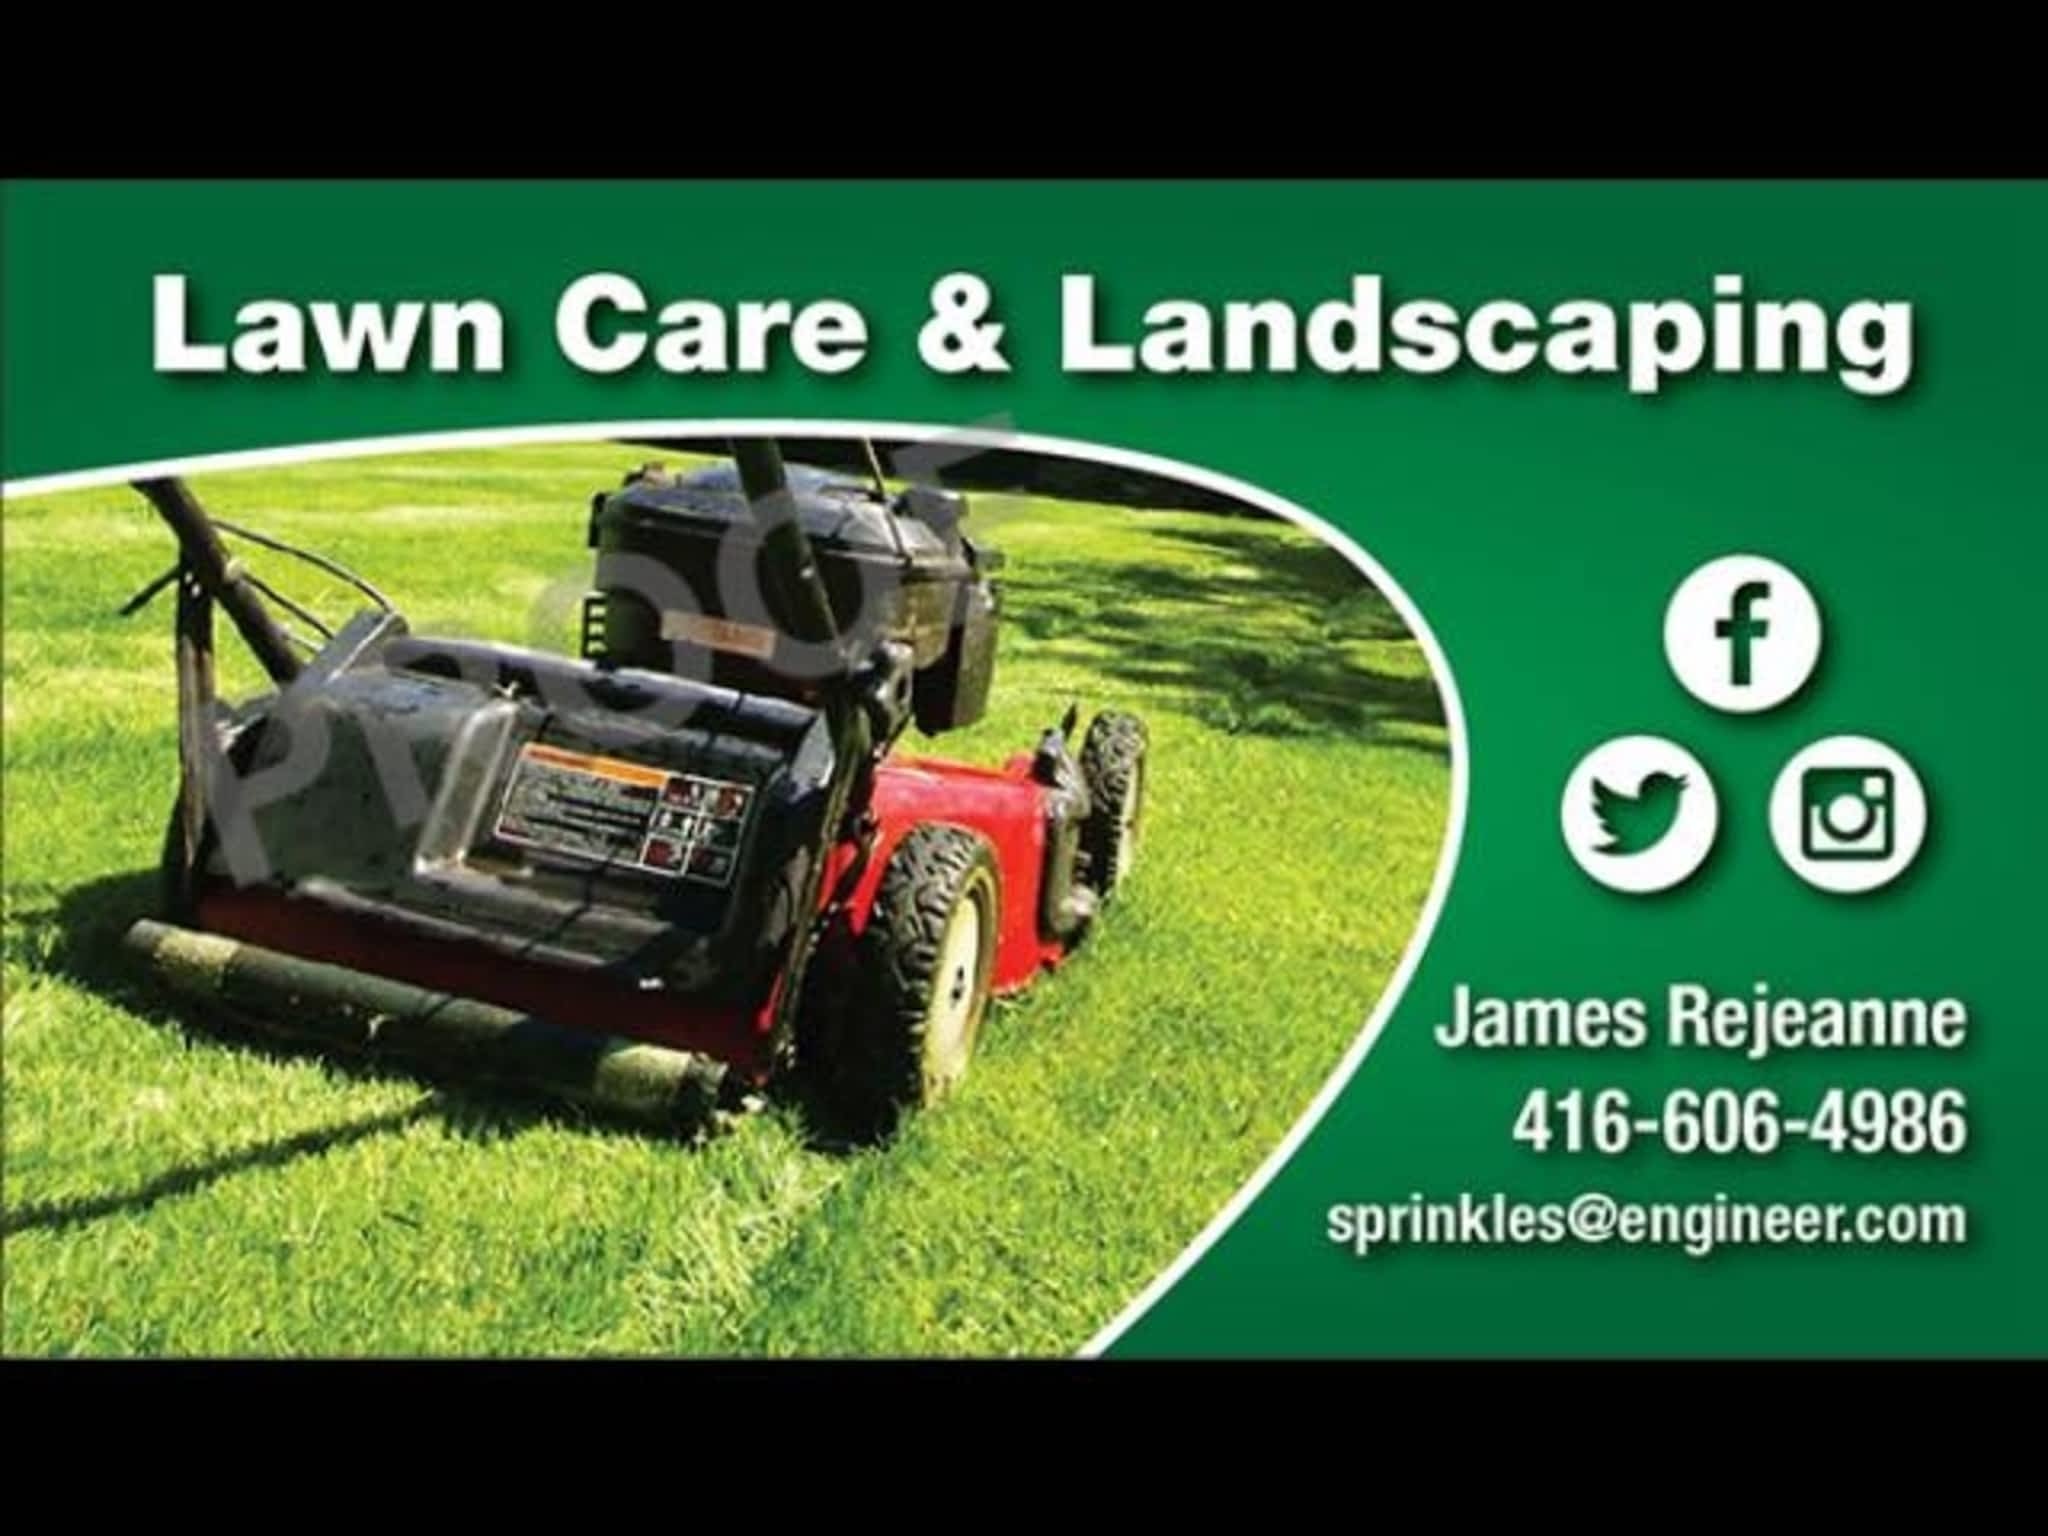 photo Sprinkles Lawn Care & Property Maintenance